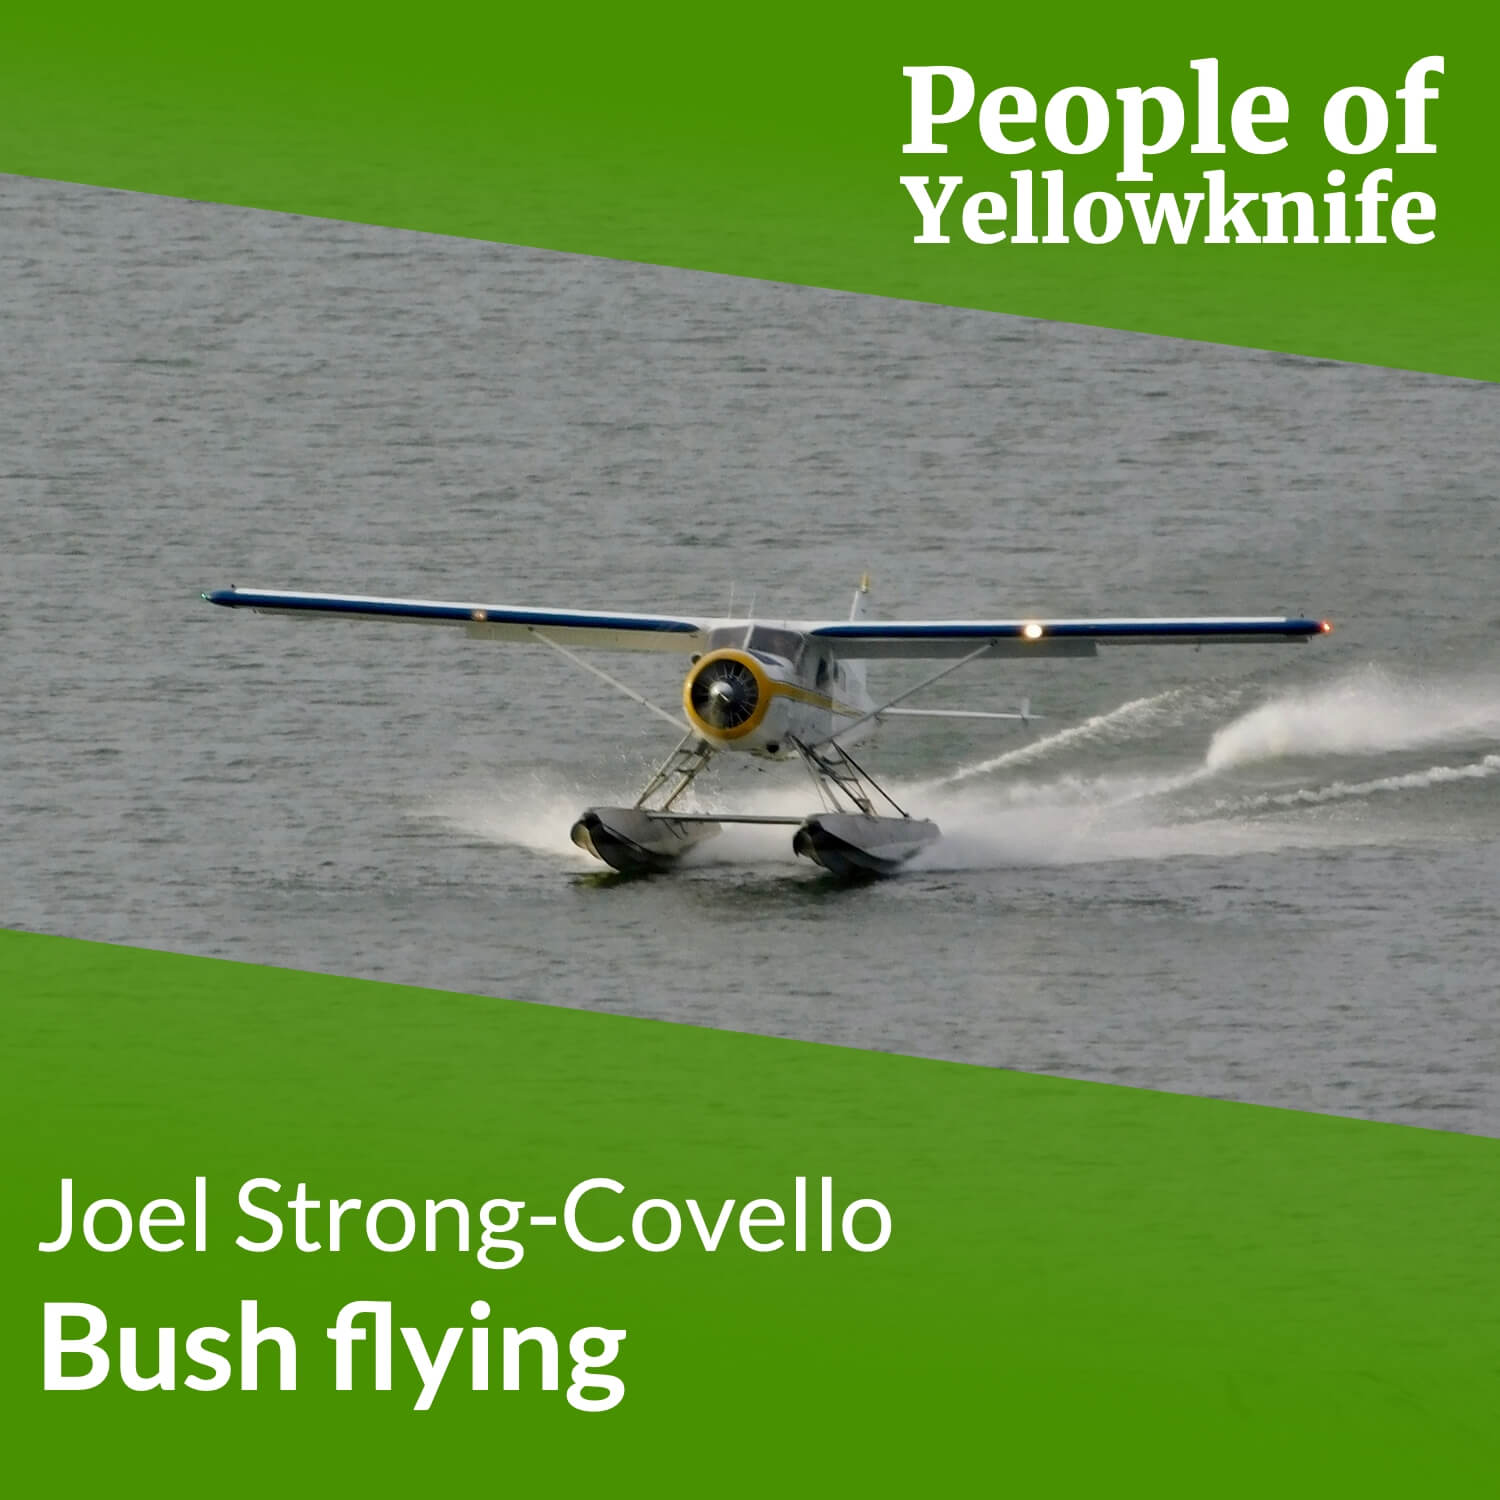 Bush flying: Joel Strong-Covello